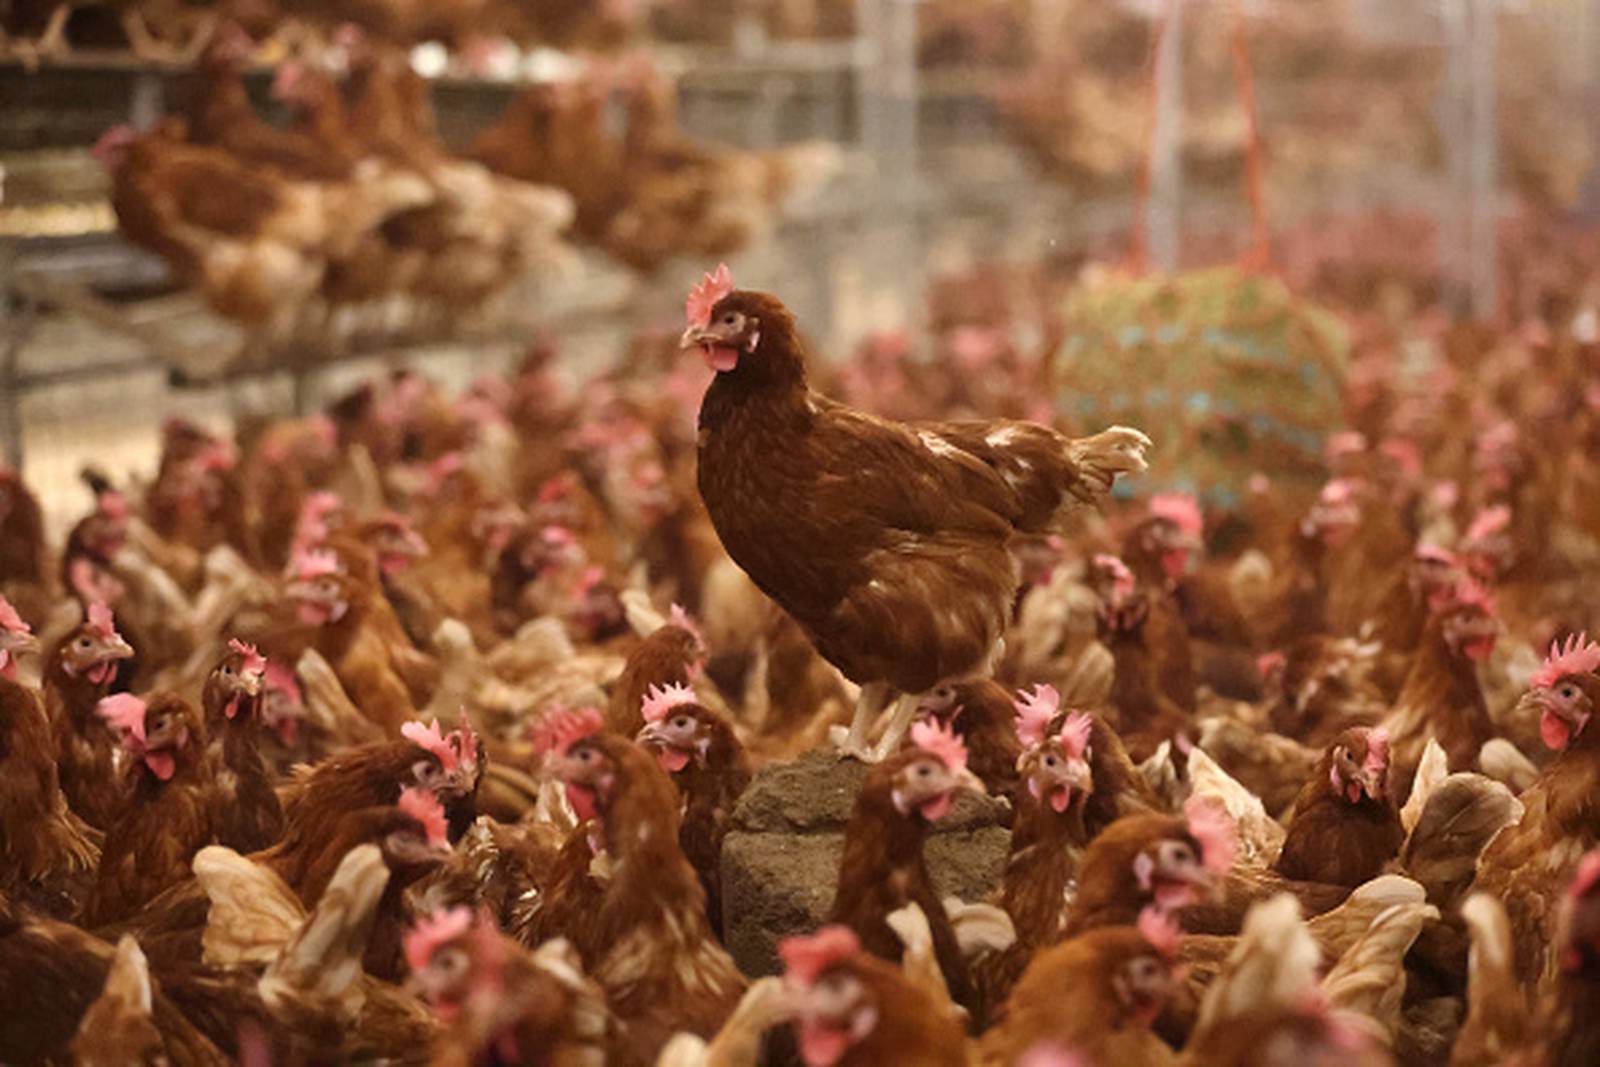 Bird flu CDC sets up dashboard to track spread of H5N1 avian influenza